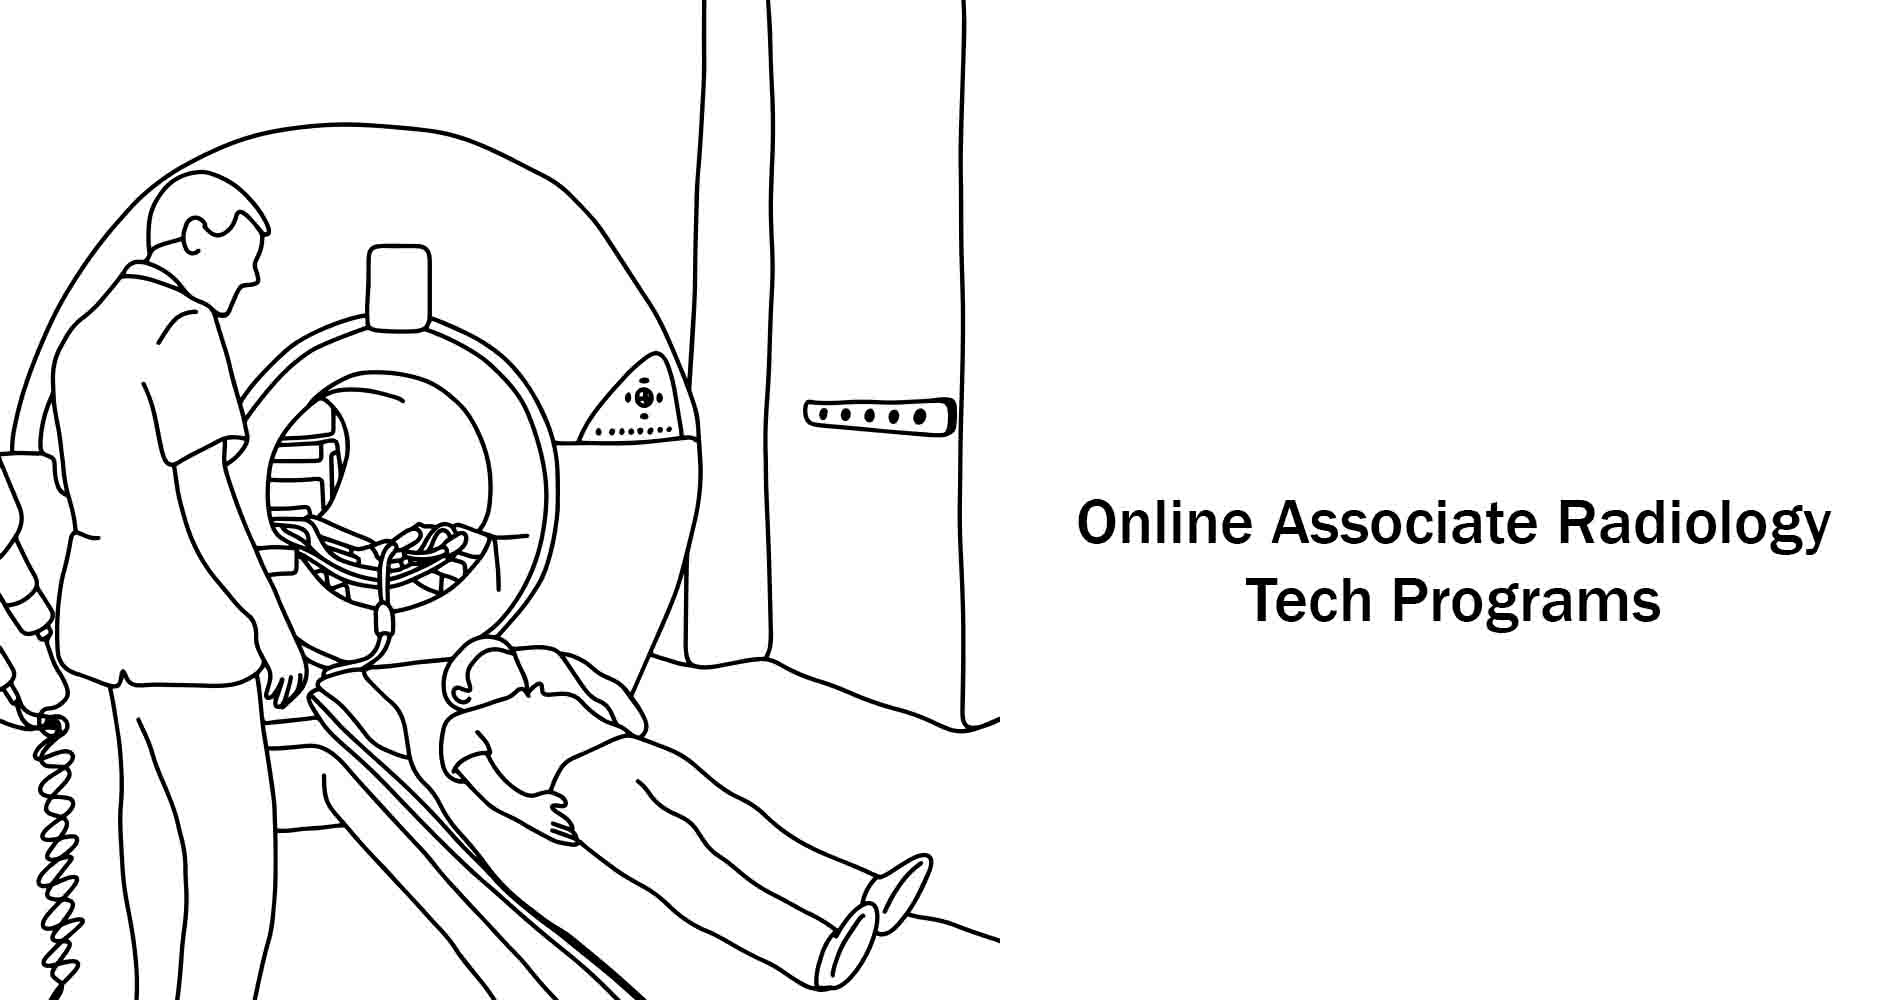 Online Associate Radiology Tech Programs